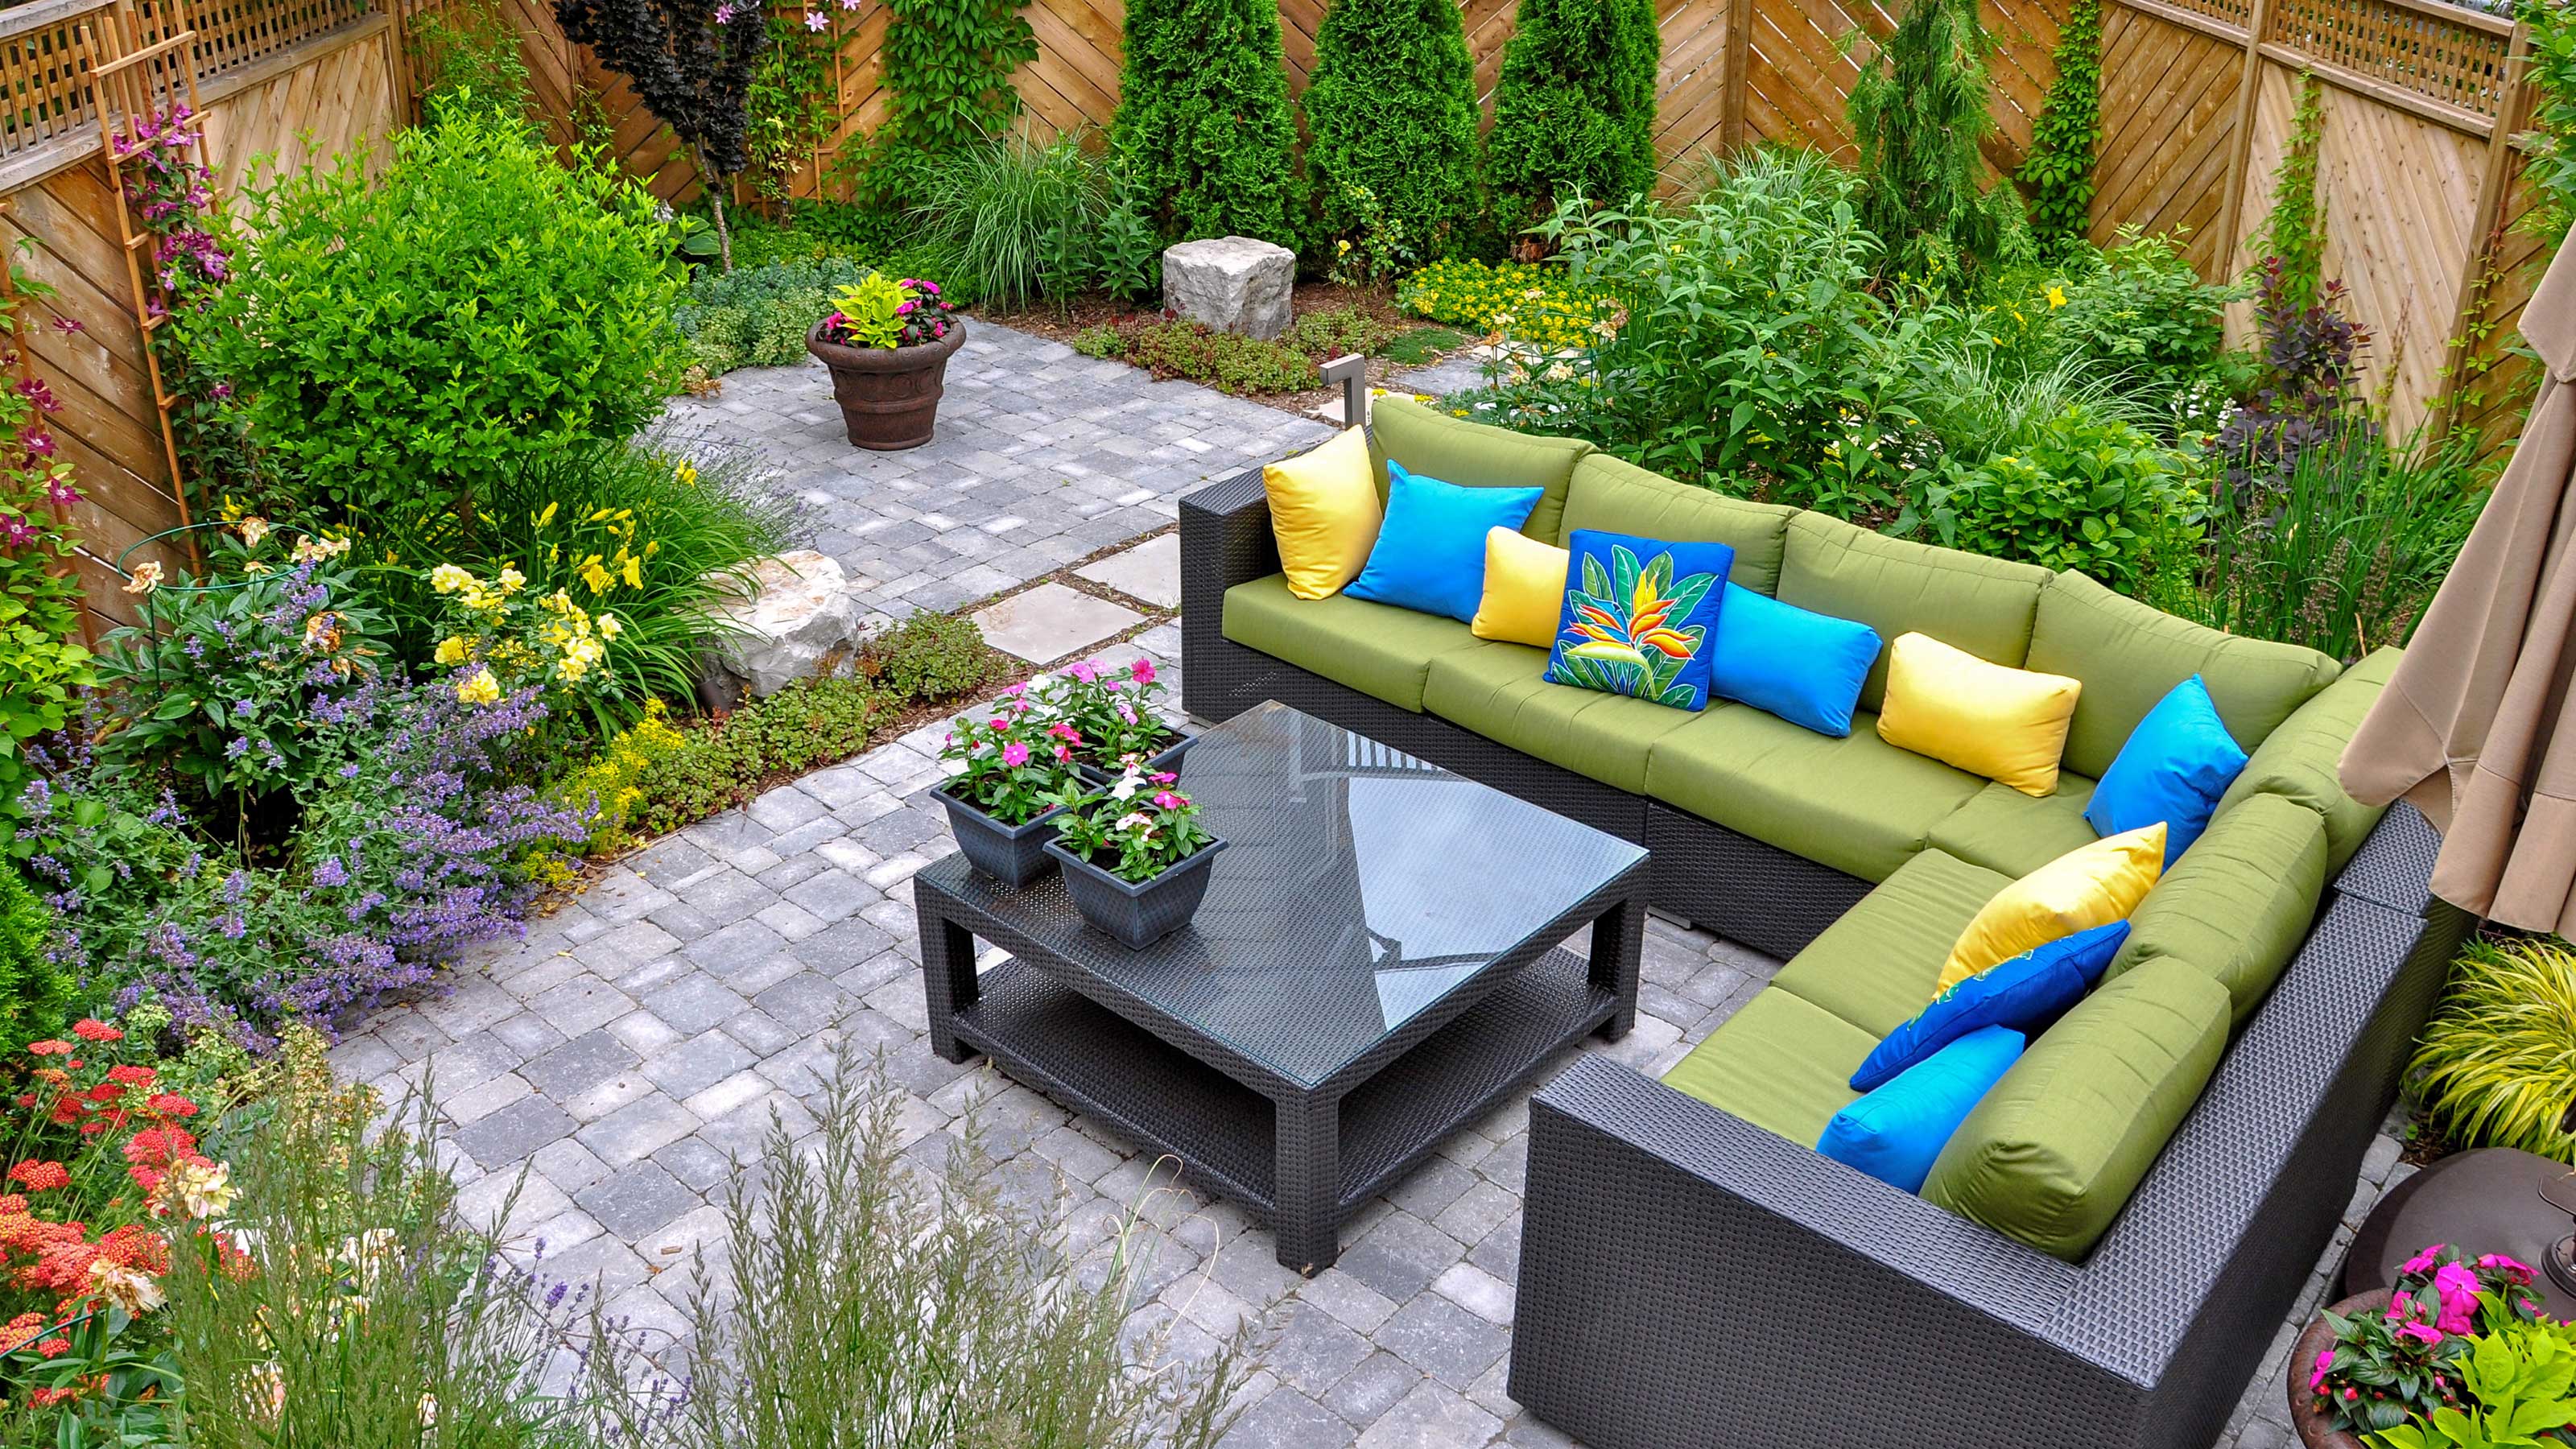 cheap no-grass backyard ideas: 10 low-maintenance looks for your